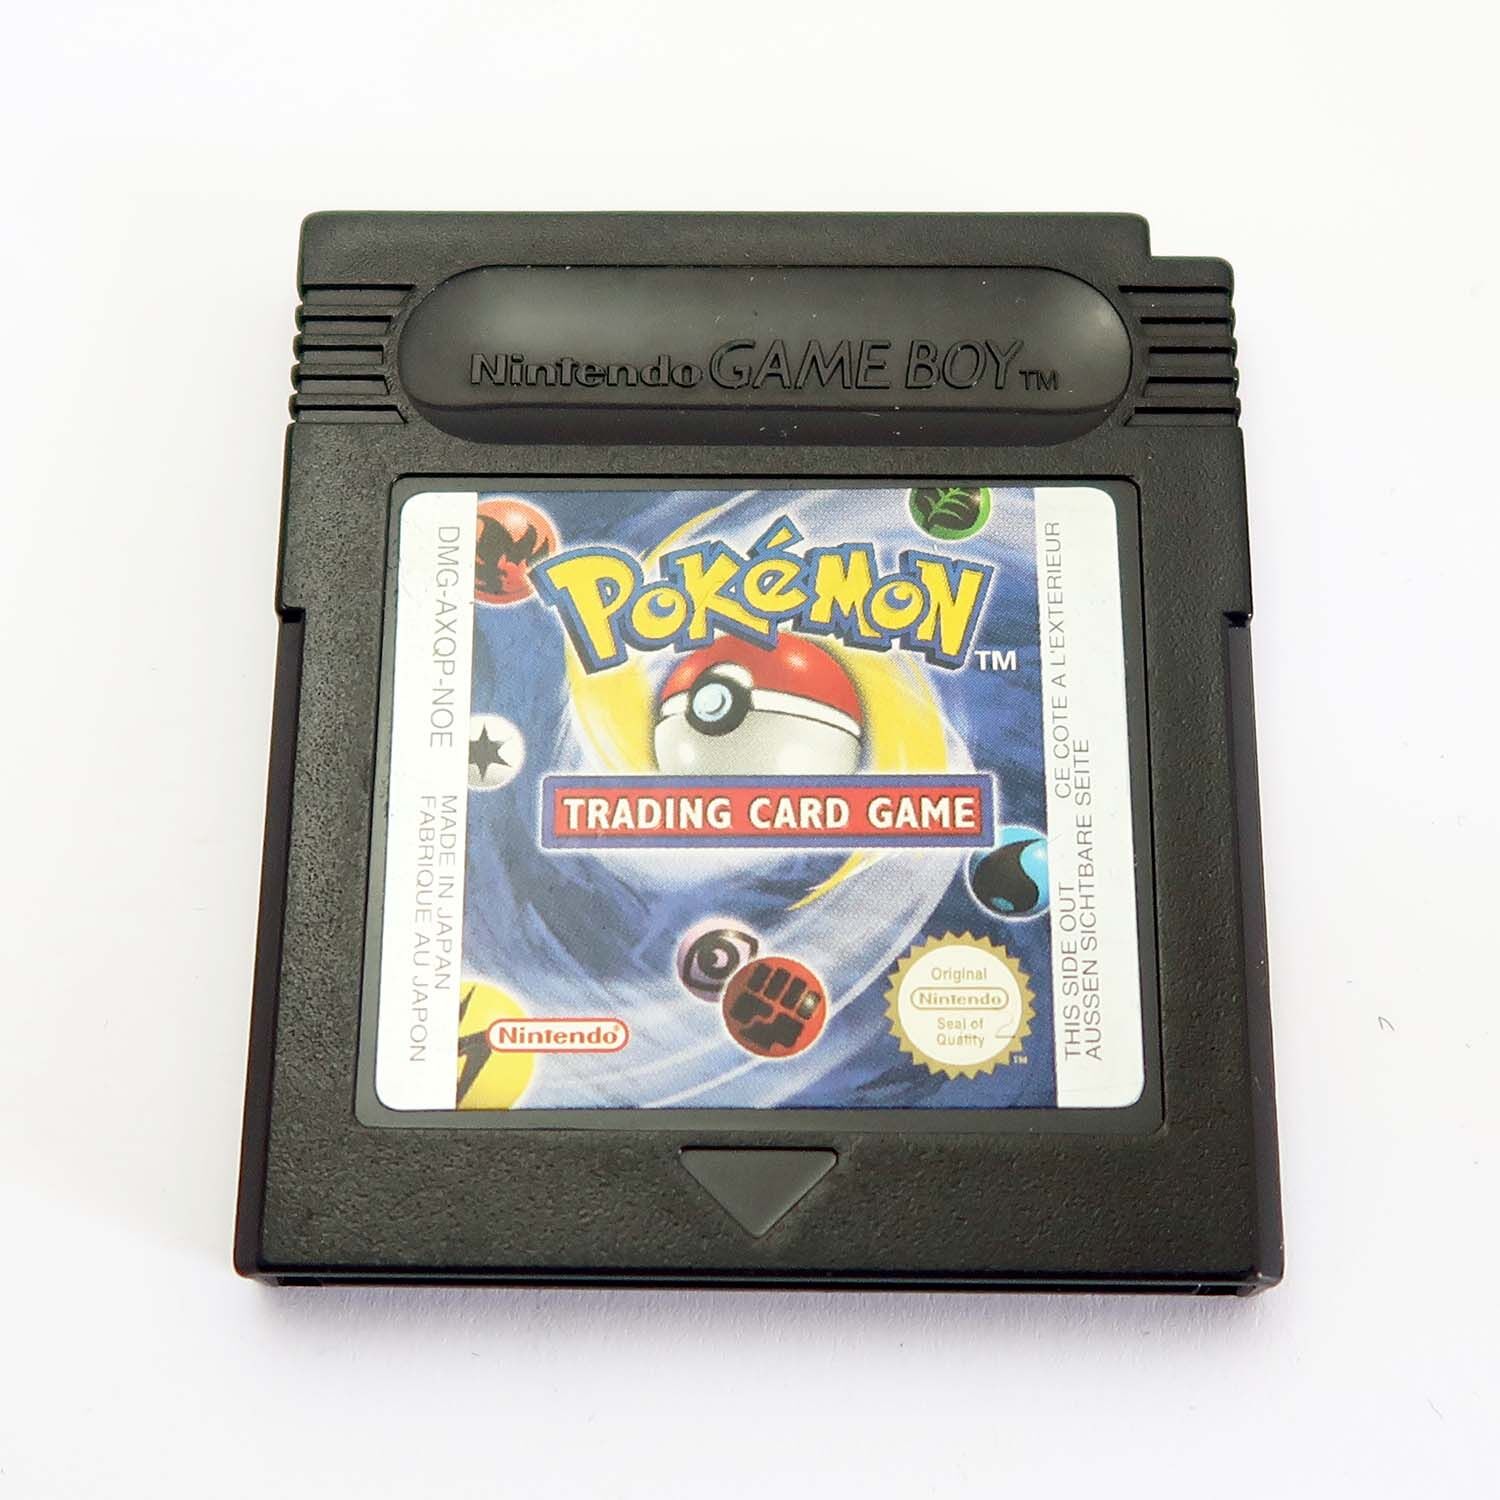 Pokémon Trading Card Game - Game Boy